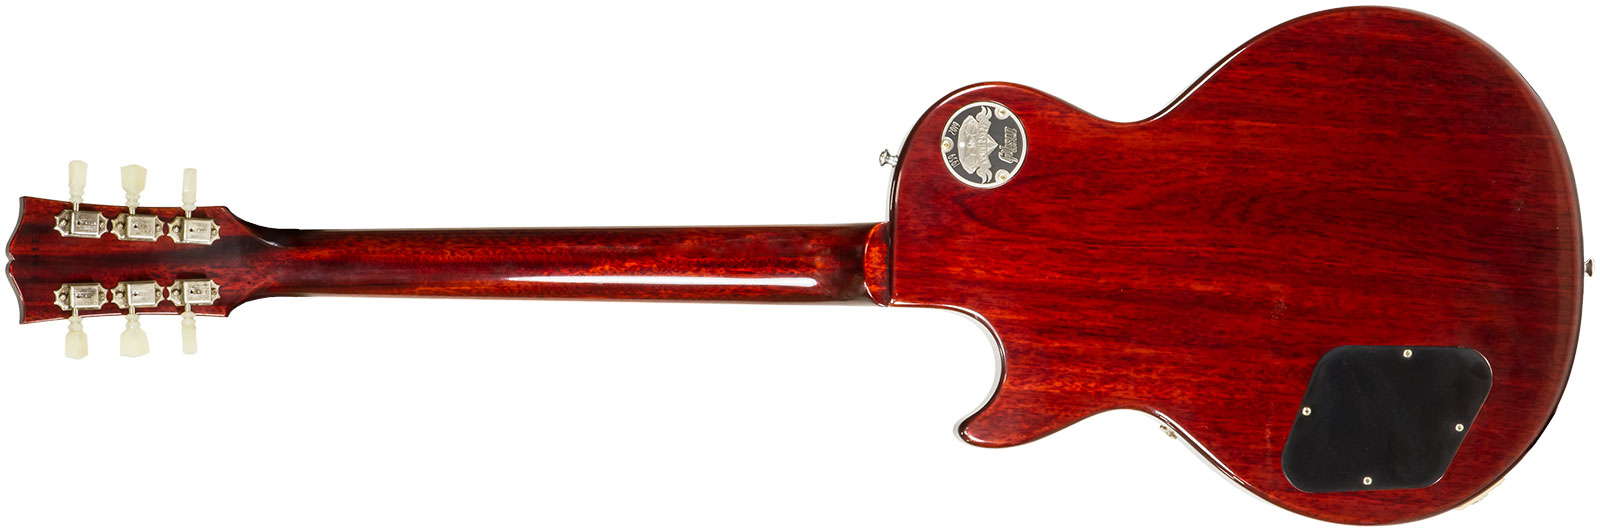 Gibson Custom Shop Les Paul Standard 1960 V2 60th Anniversary 2h Ht Rw #00492 - Vos Tomato Soup Burst - Single cut electric guitar - Variation 1